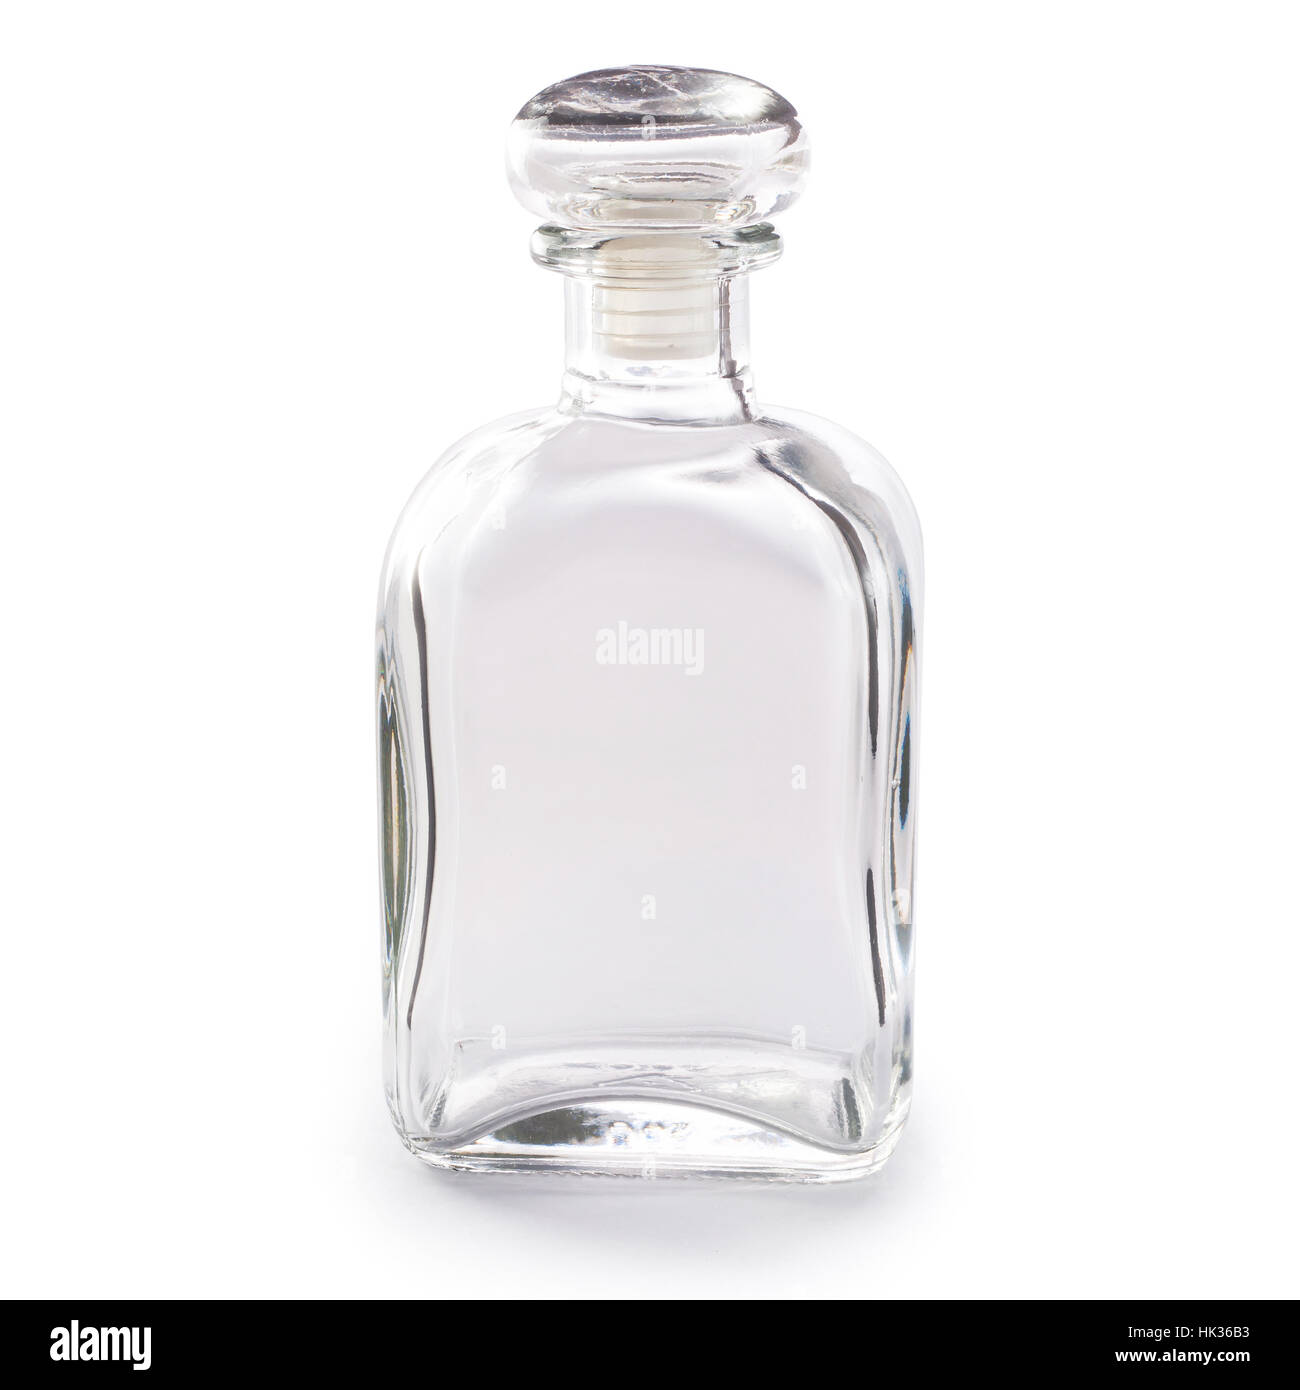 https://c8.alamy.com/comp/HK36B3/empty-glass-bottle-isolated-on-white-background-HK36B3.jpg